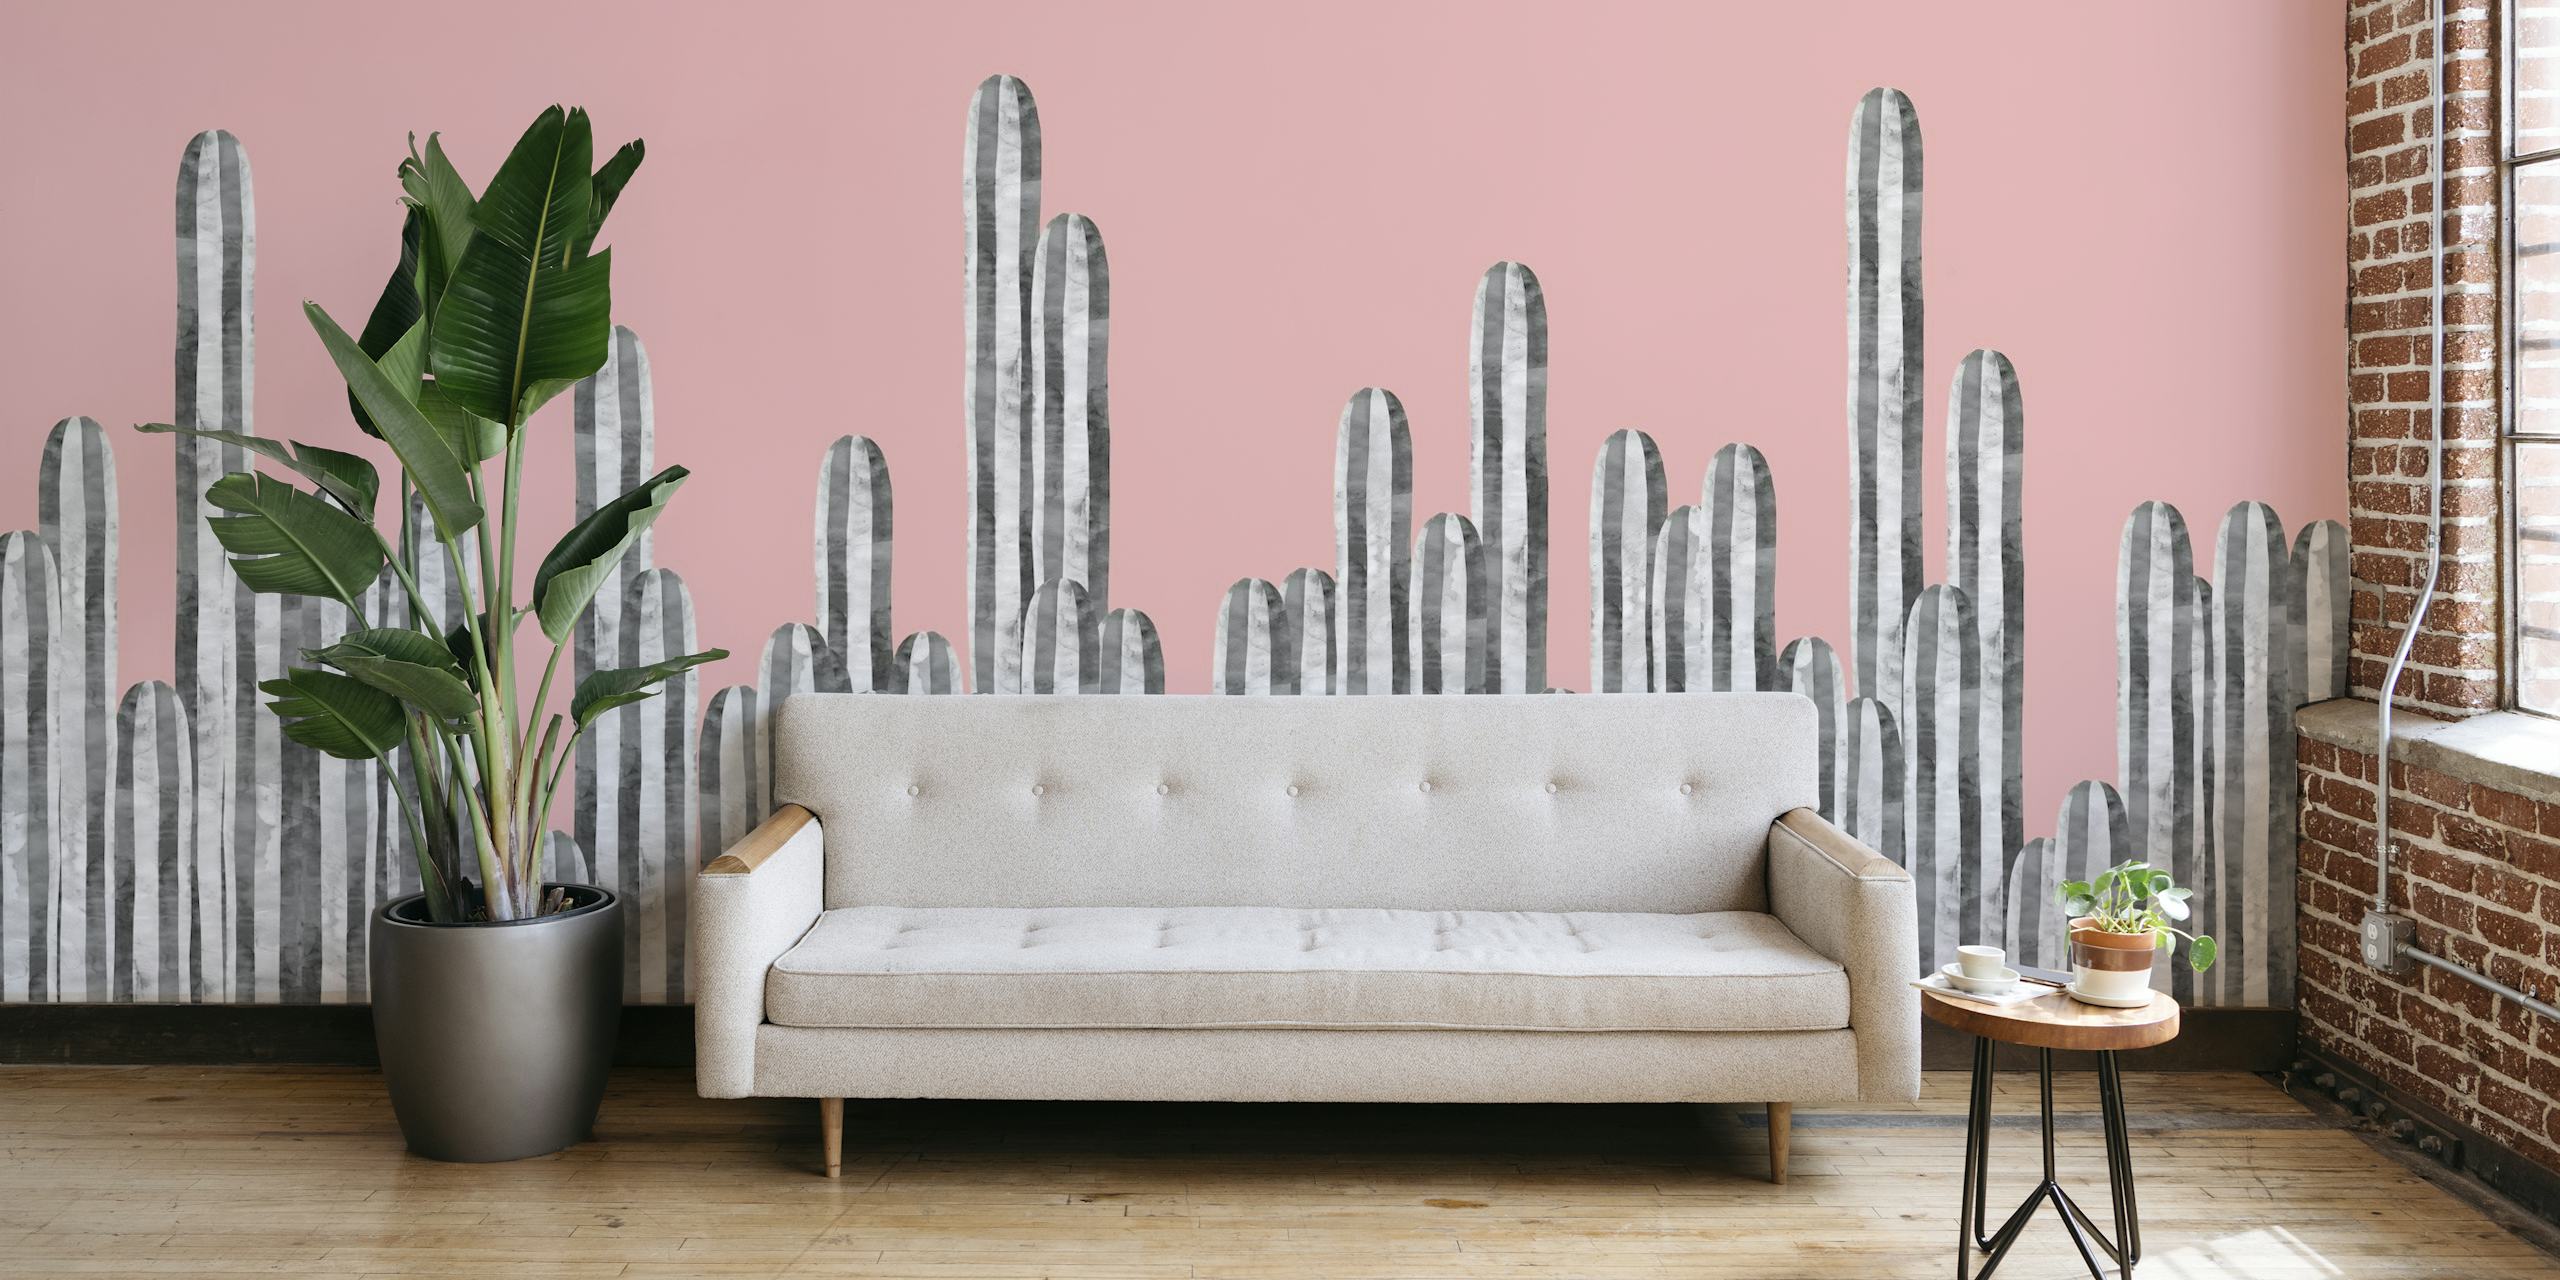 Cactus landscape papel pintado